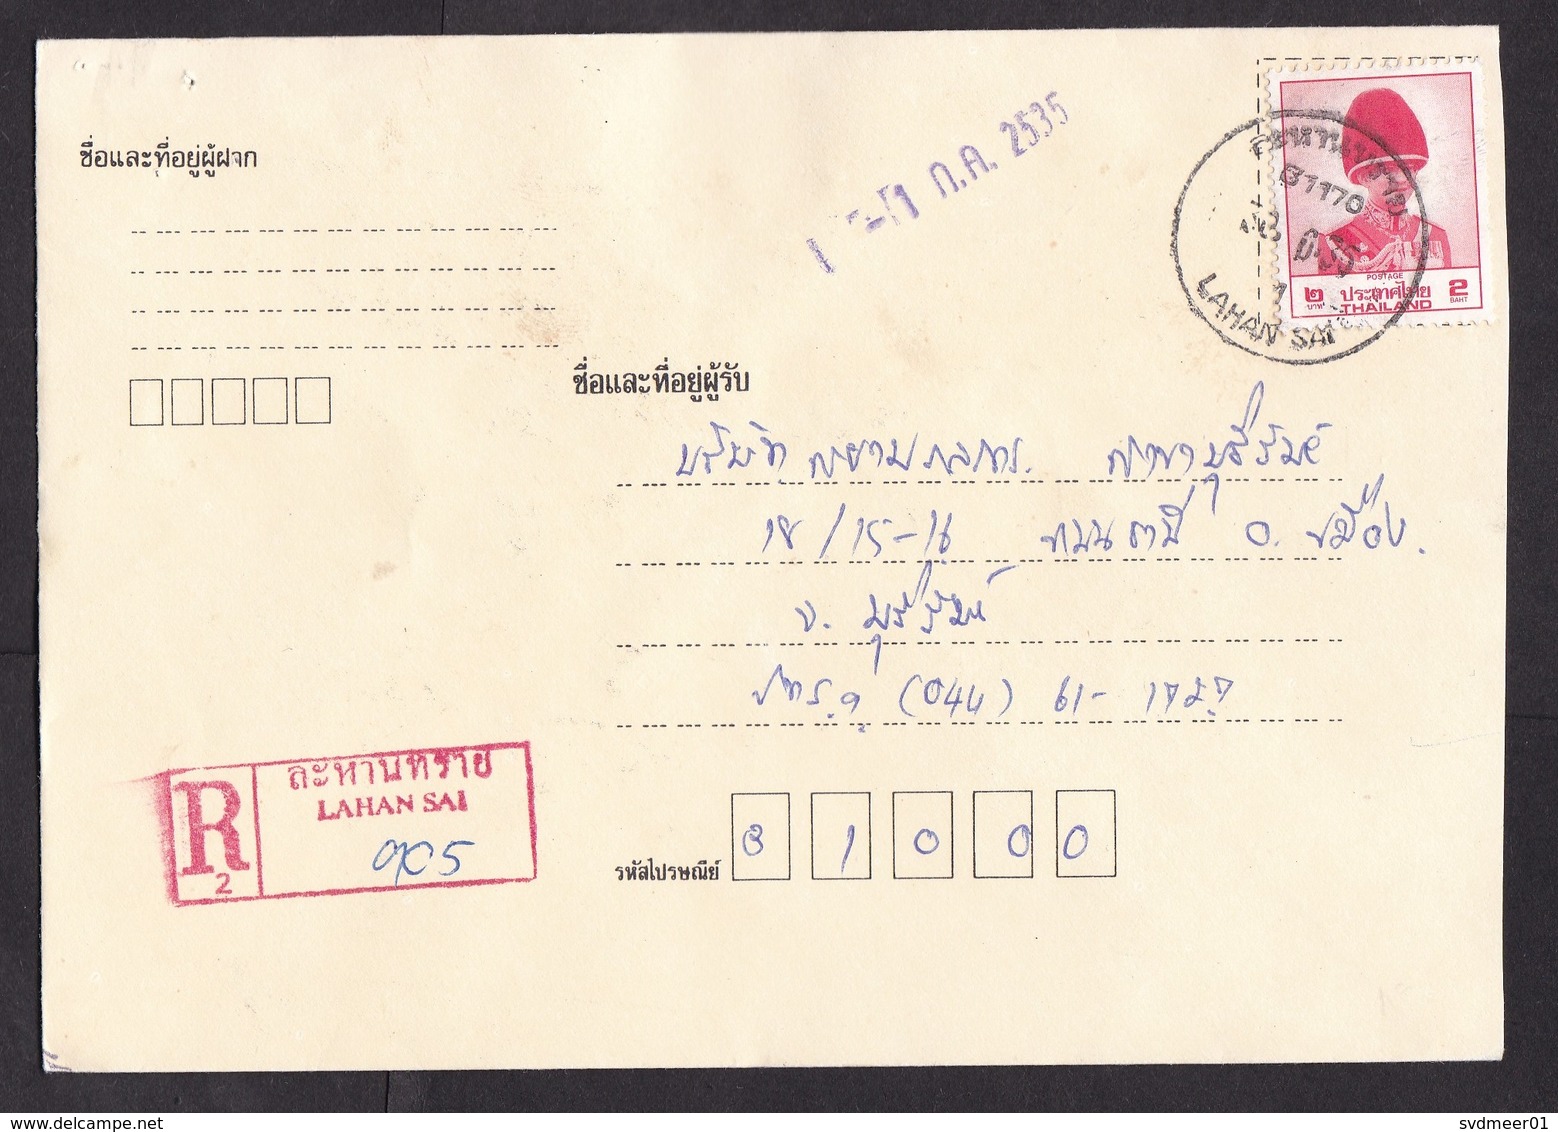 Thailand: Registered Cover, 1 Stamp, King, Lahan Sai To Buri Ram, Large Postal Label At Back (staple Hole) - Thailand